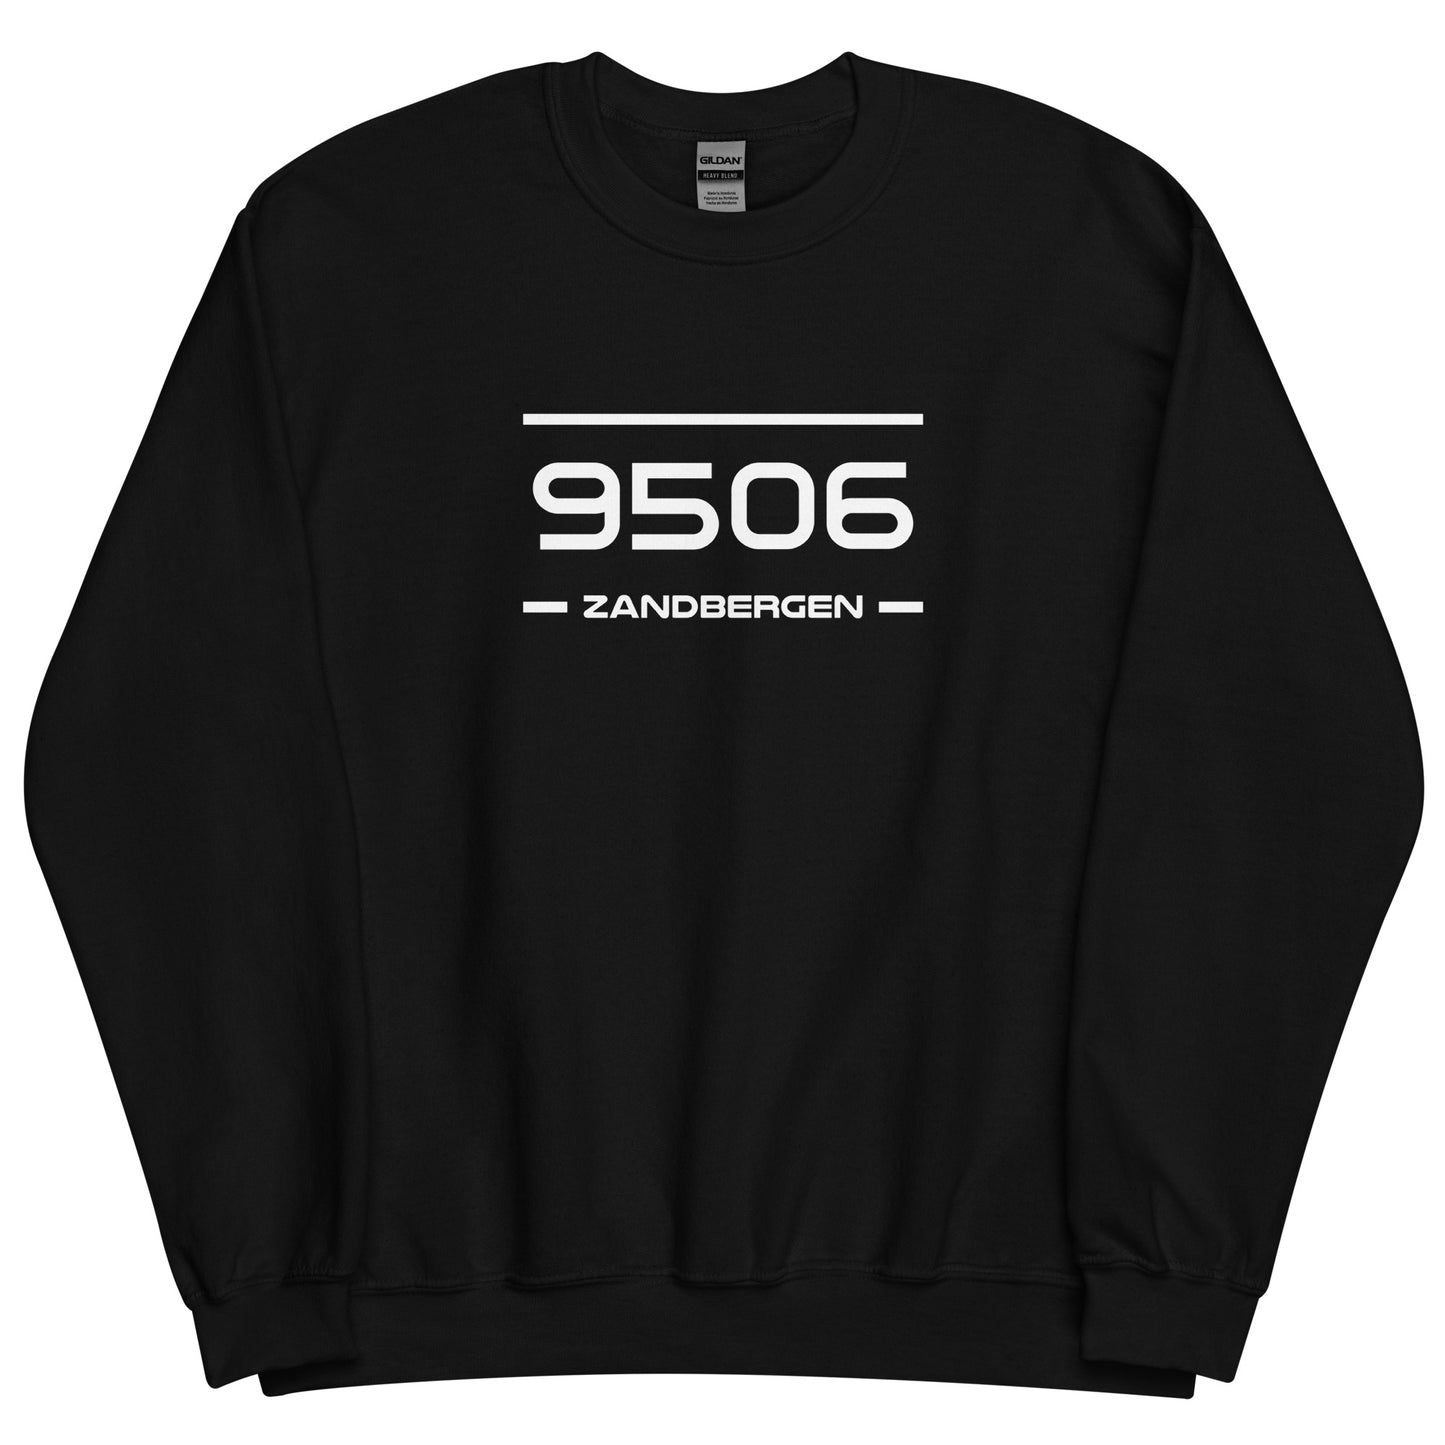 Sweater - 9506 - Zandbergen (M/V)